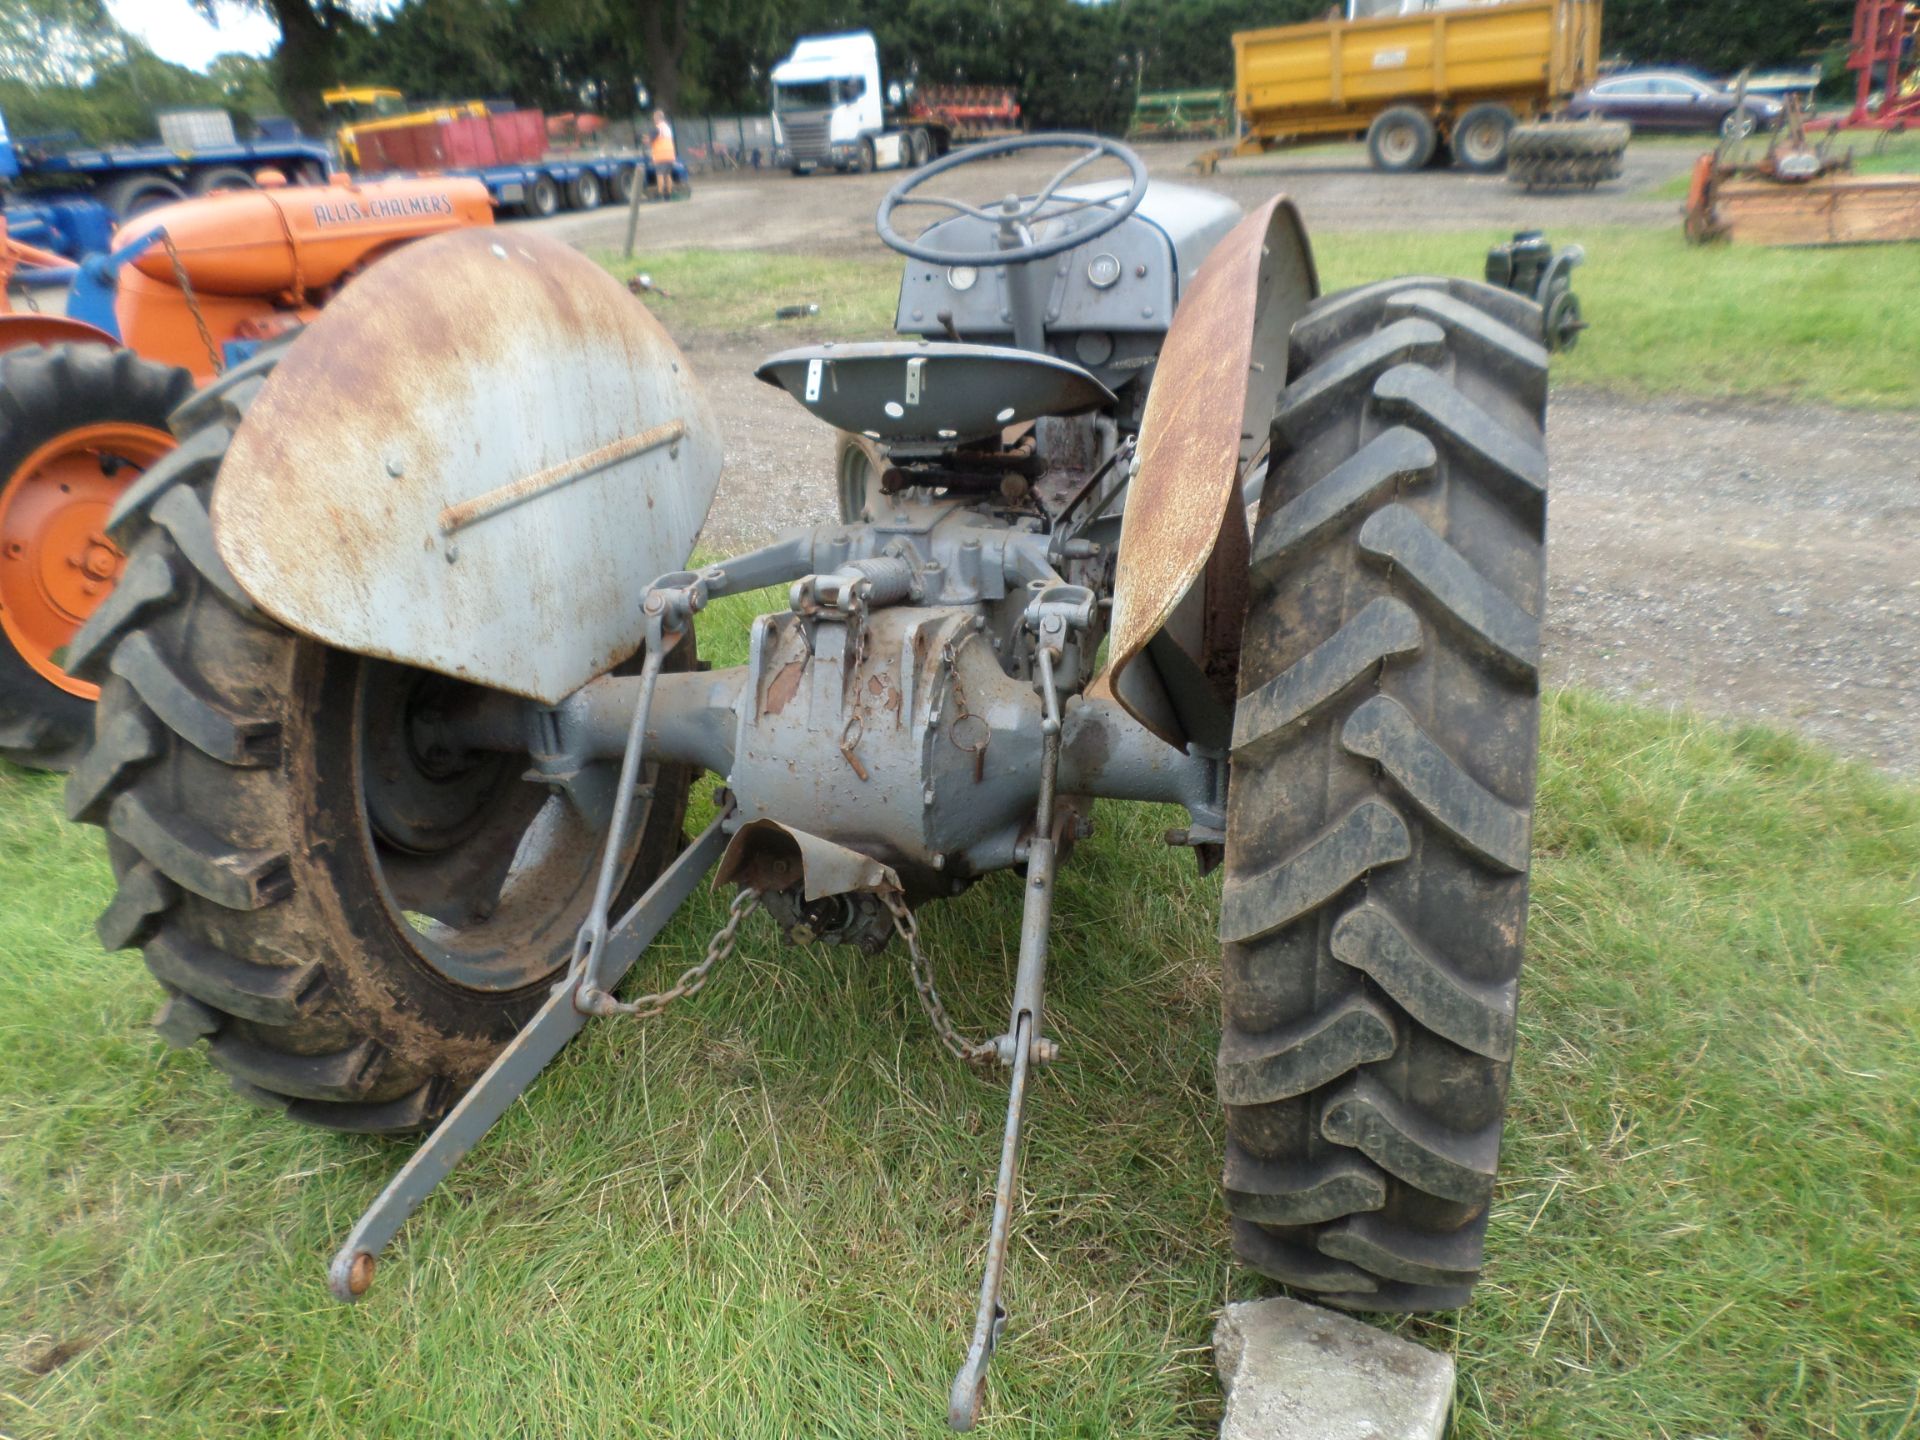 Massey Ferguson 1951 petrol tractor, barn find - Image 2 of 4